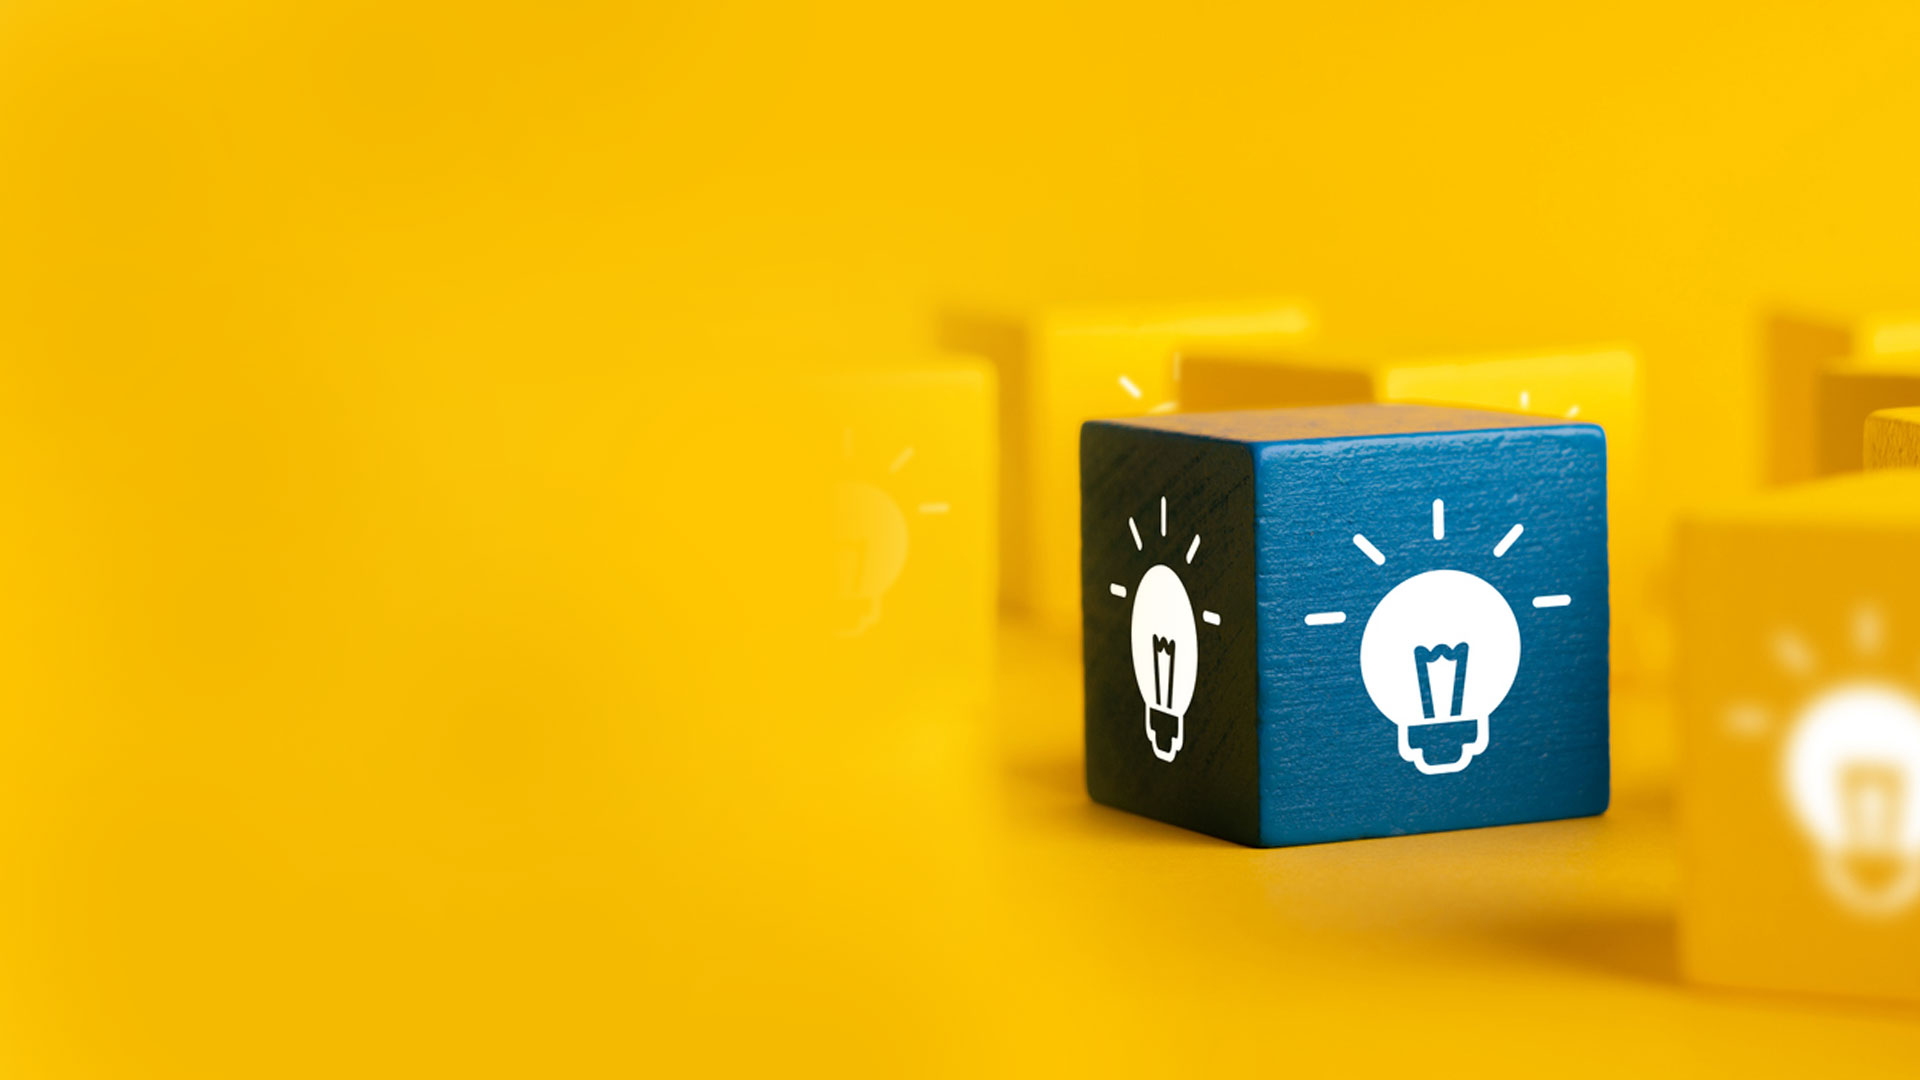 ightbulb and lamp icon on blocks for rethinking innovative marketing